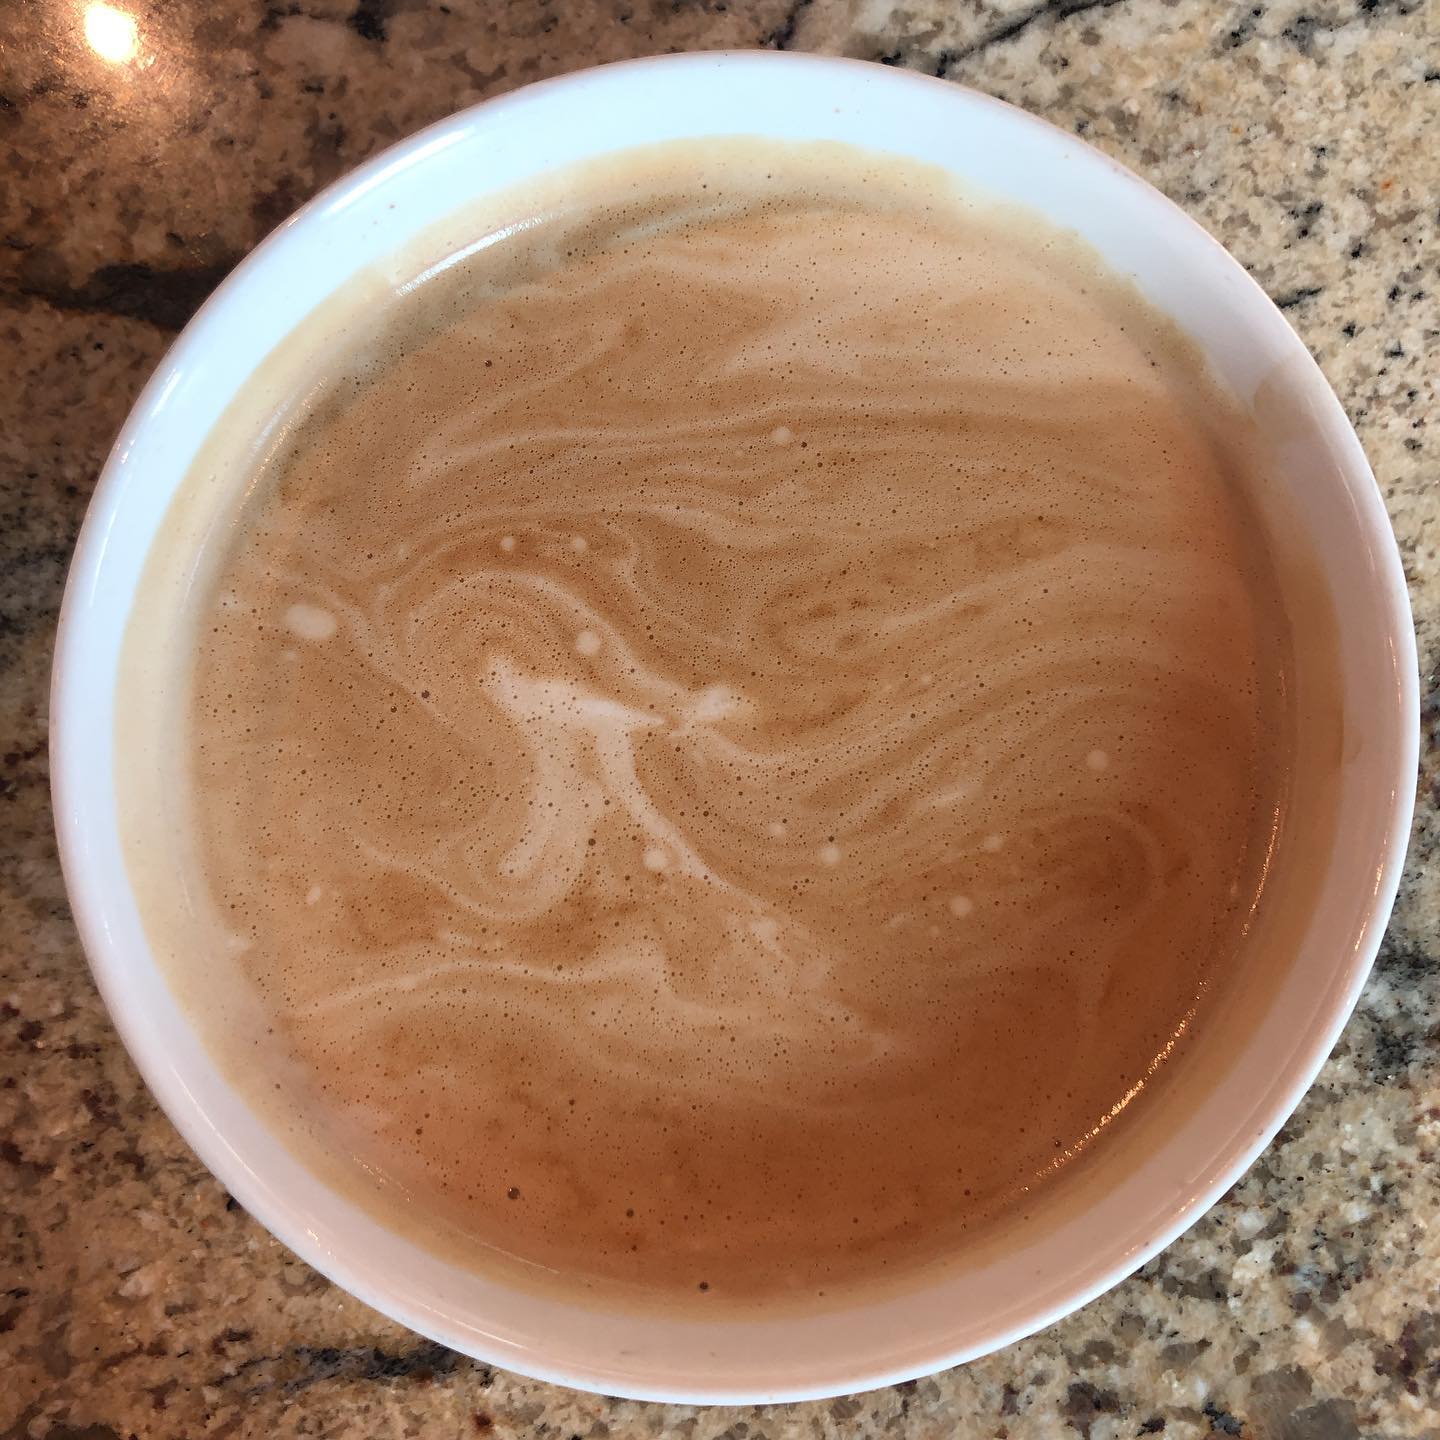 Gas planet bowl of latte :)